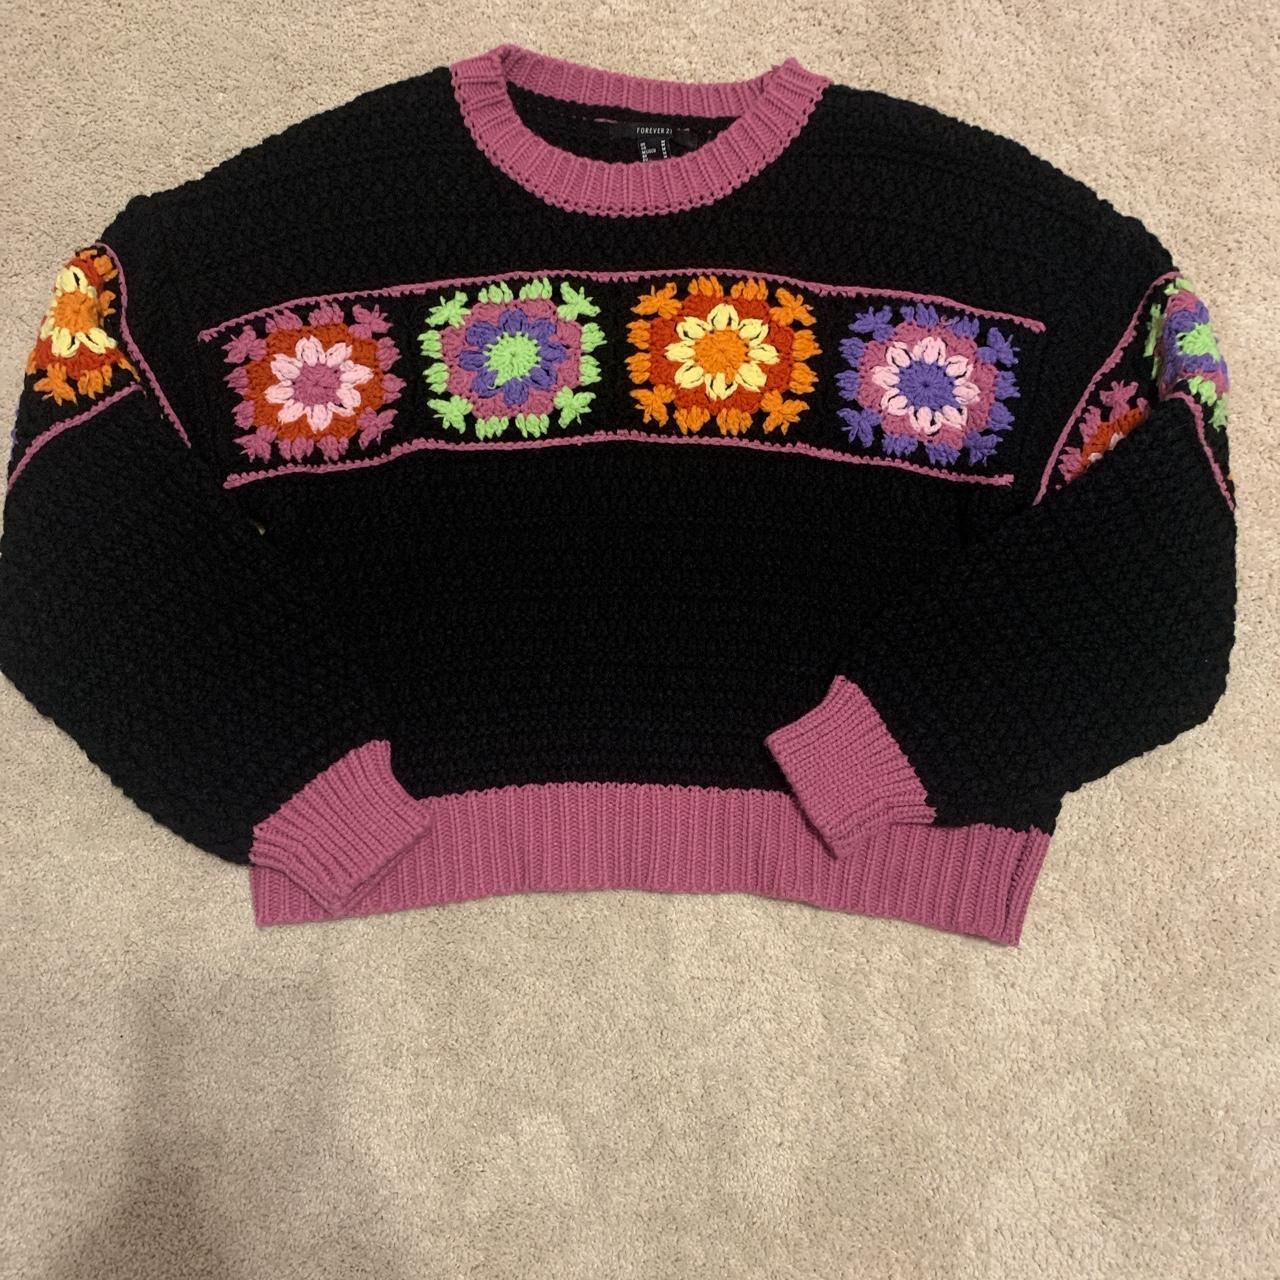 granny square crochet sweater - Depop